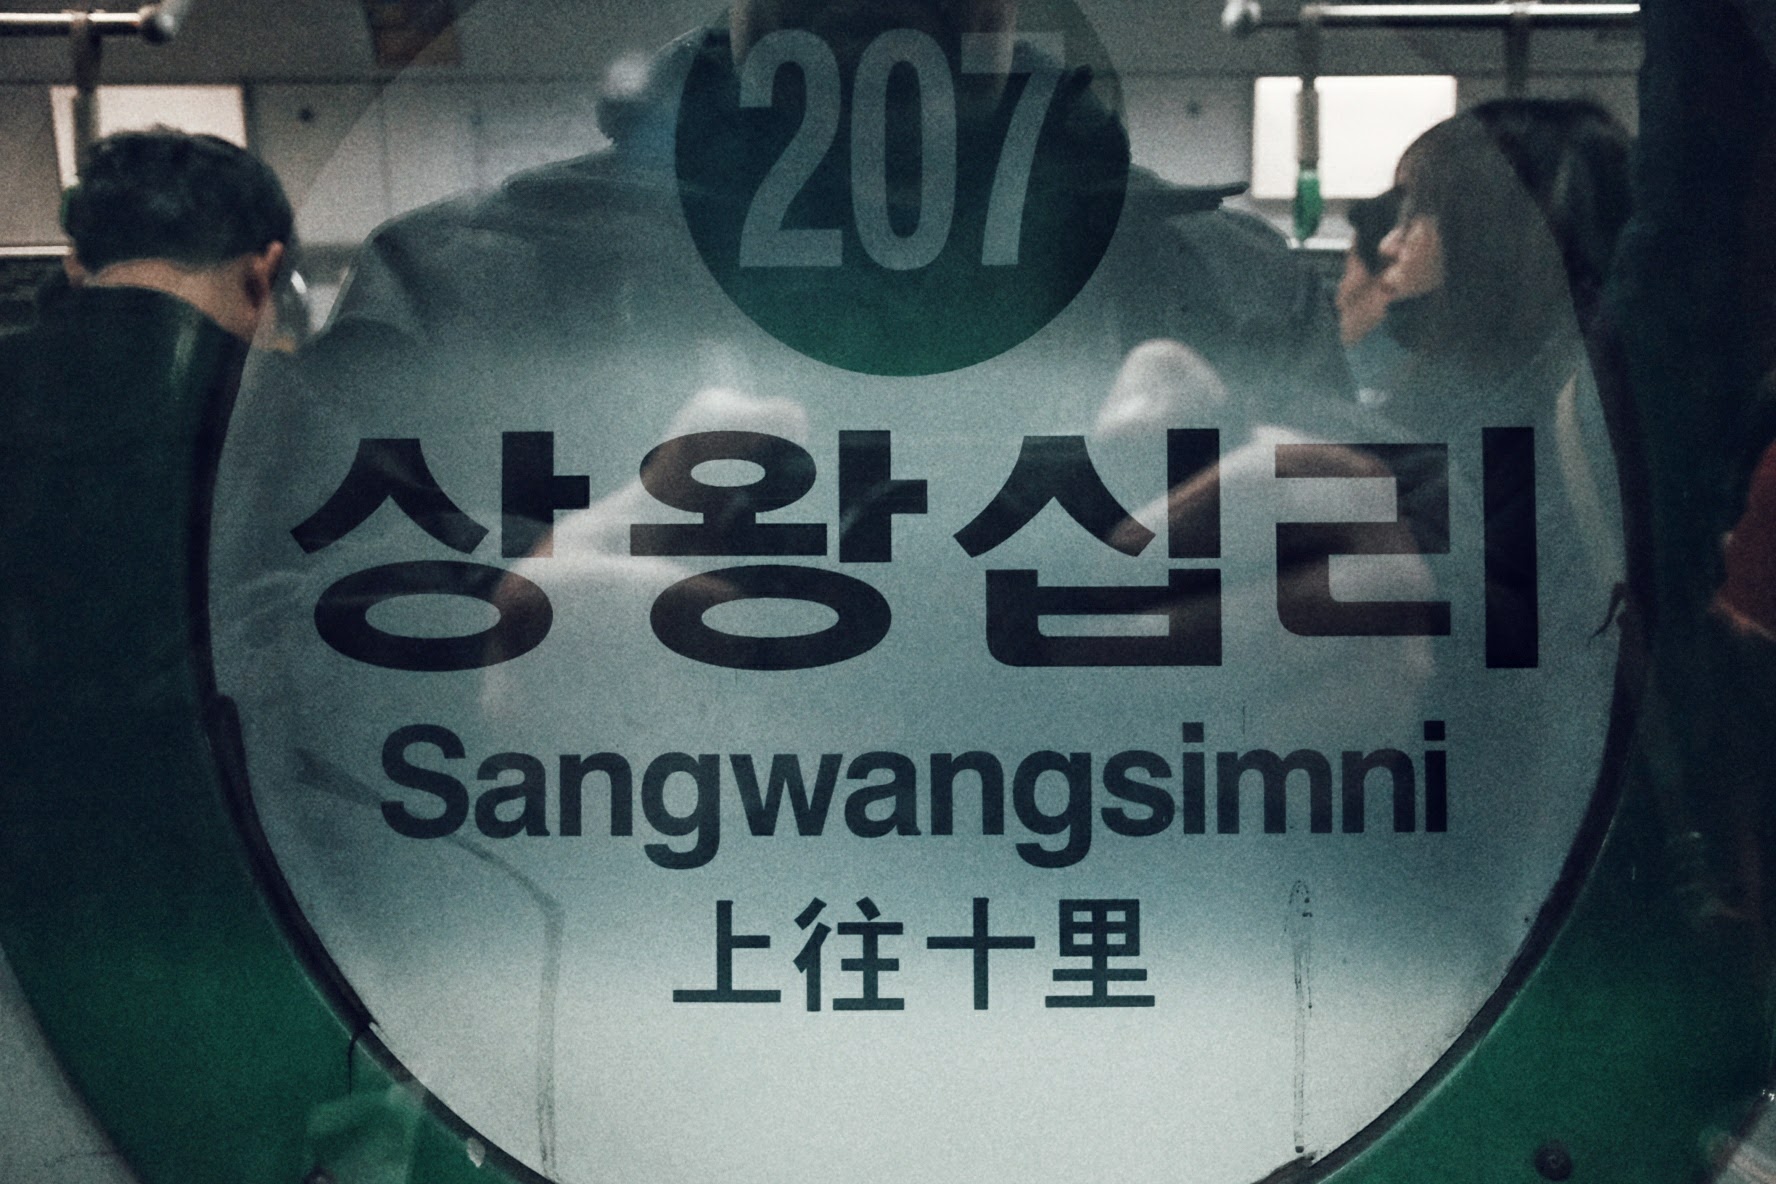 Sangwangsimi Station, Seoul, South Korea